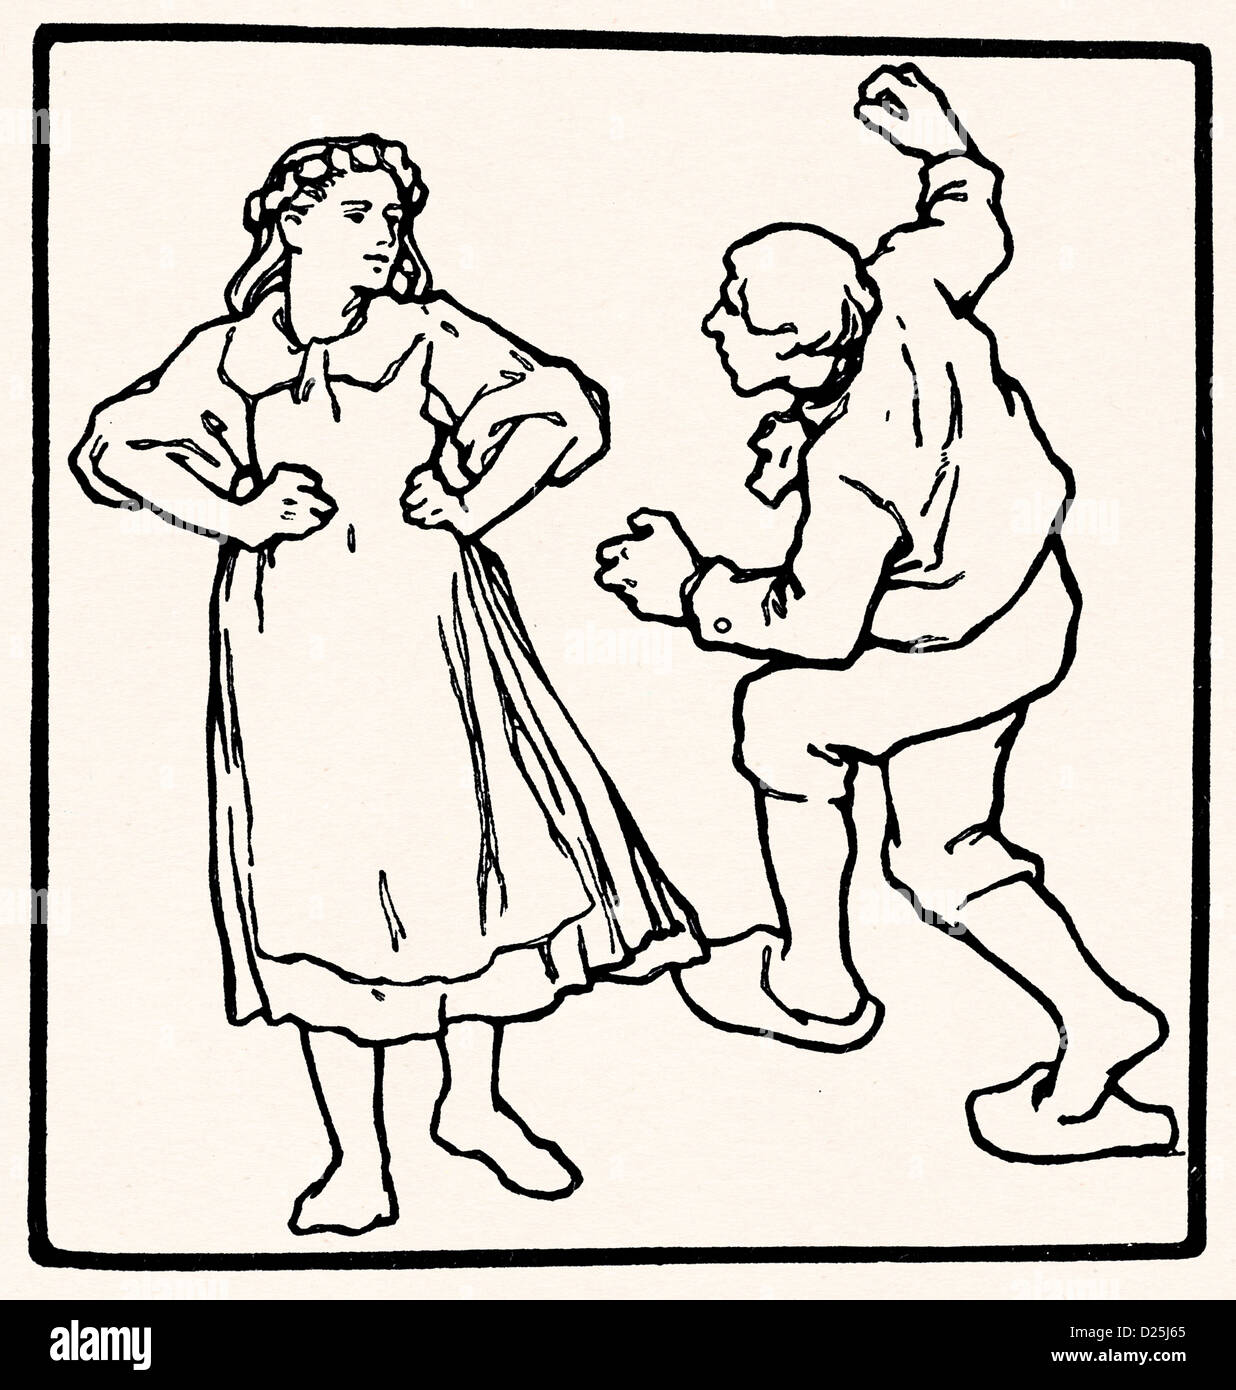 Man and woman dance Stock Photo